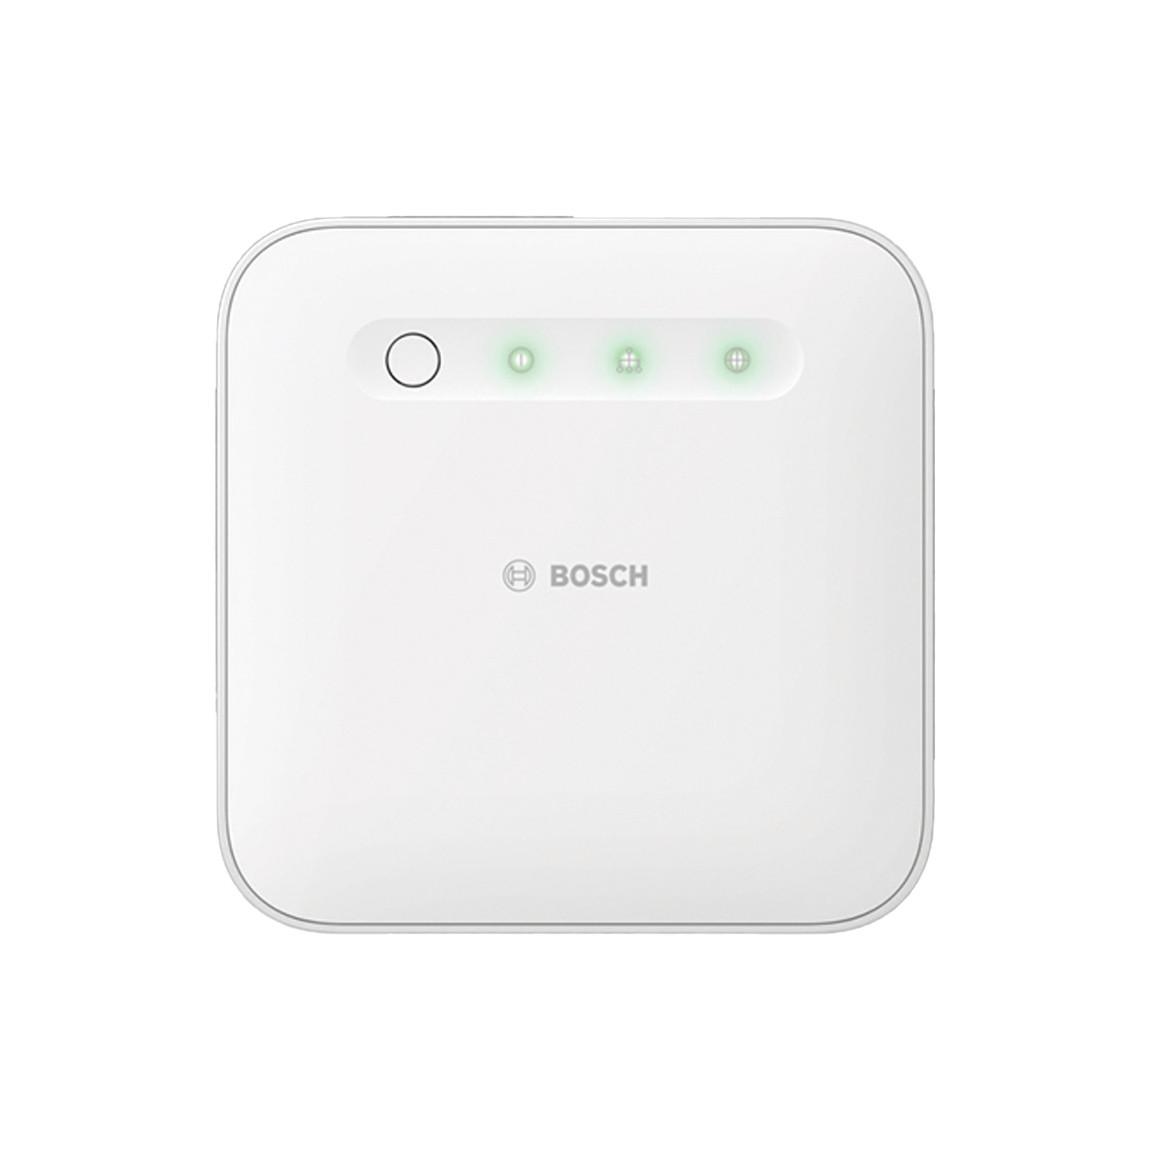 Bosch Smart Home - Starter Set Heizung II mit 5 Thermostaten_Controller frontal